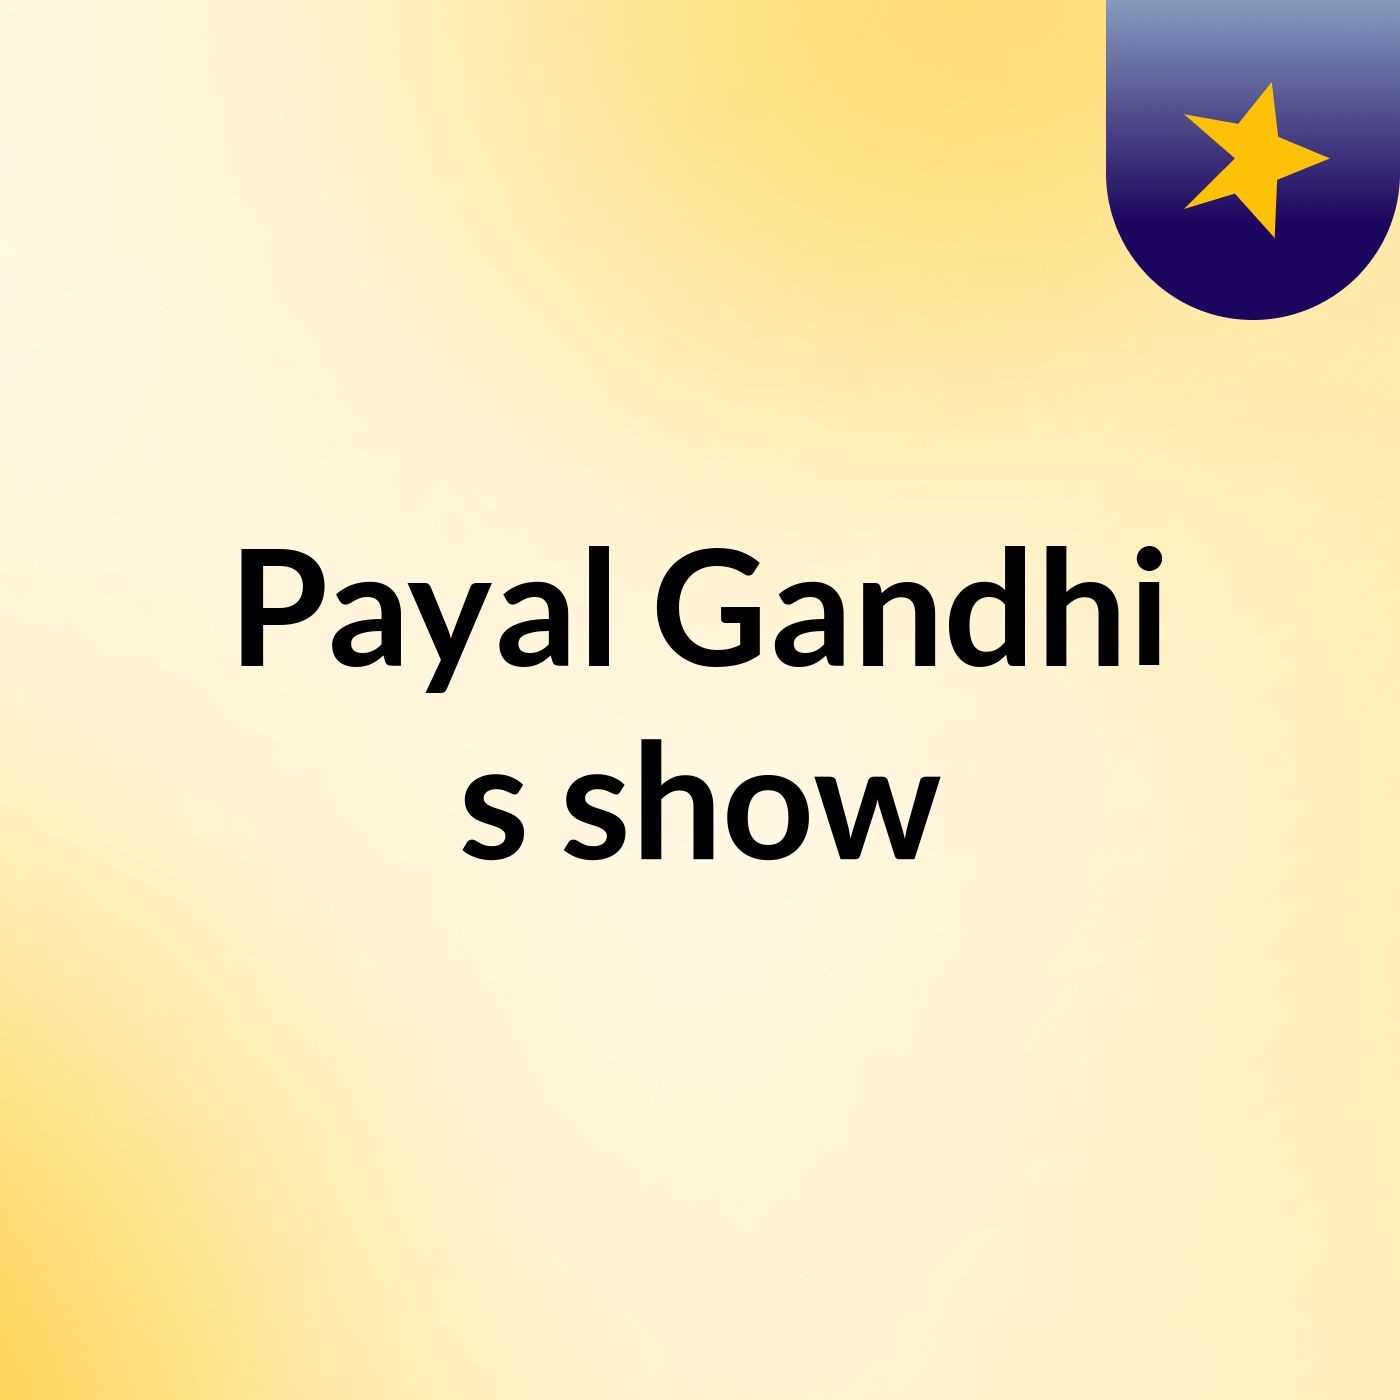 Payal Gandhi's show